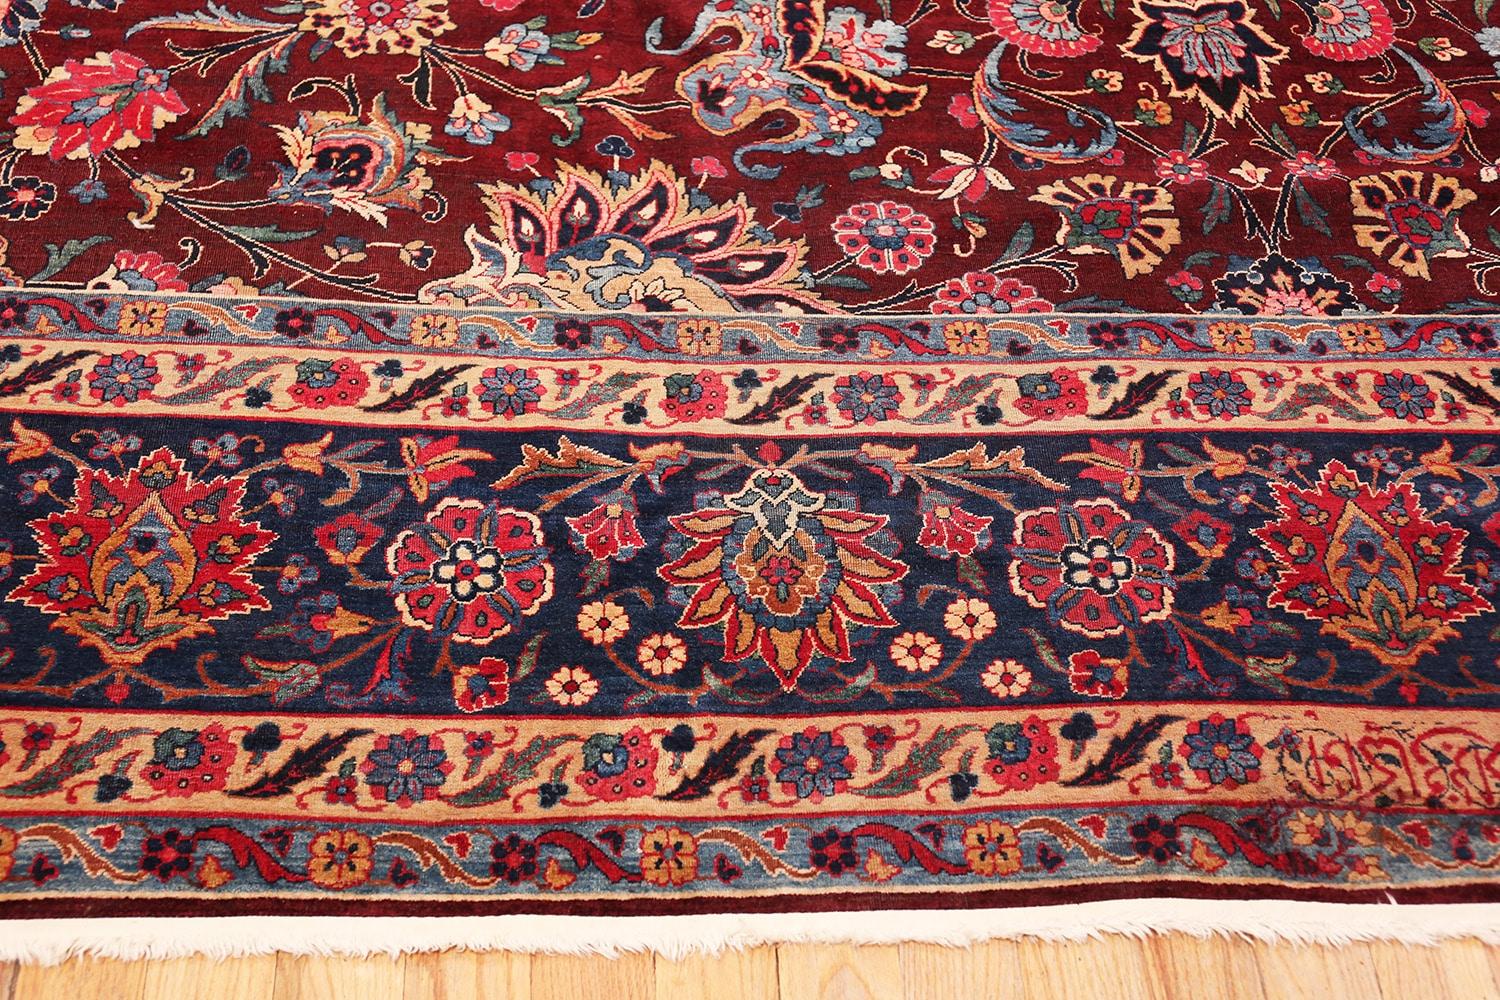 Antique Persian Kerman, country of origin: Persia, date circa 1900. Size: 11 ft 8 in x 21 ft 2 in (3.56 m x 6.45 m)

